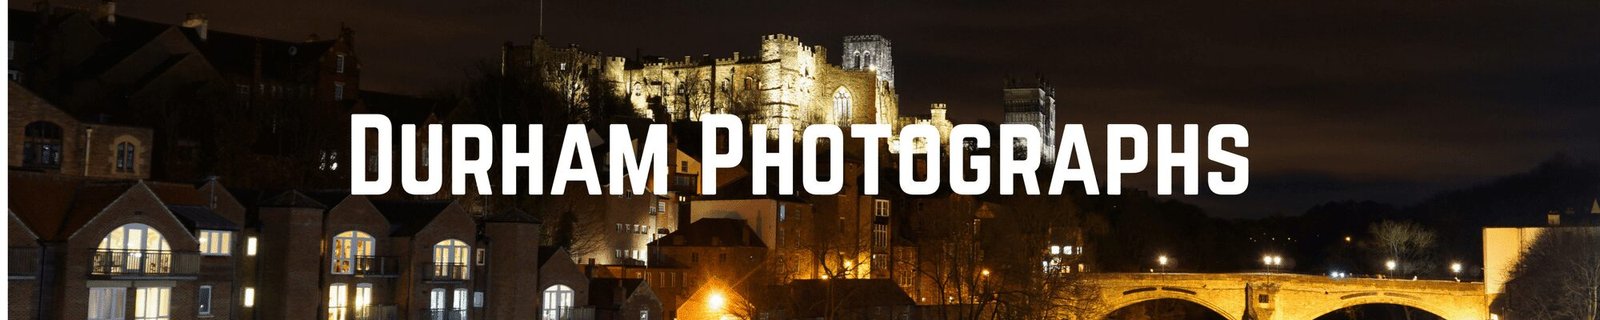 Durham Photographs